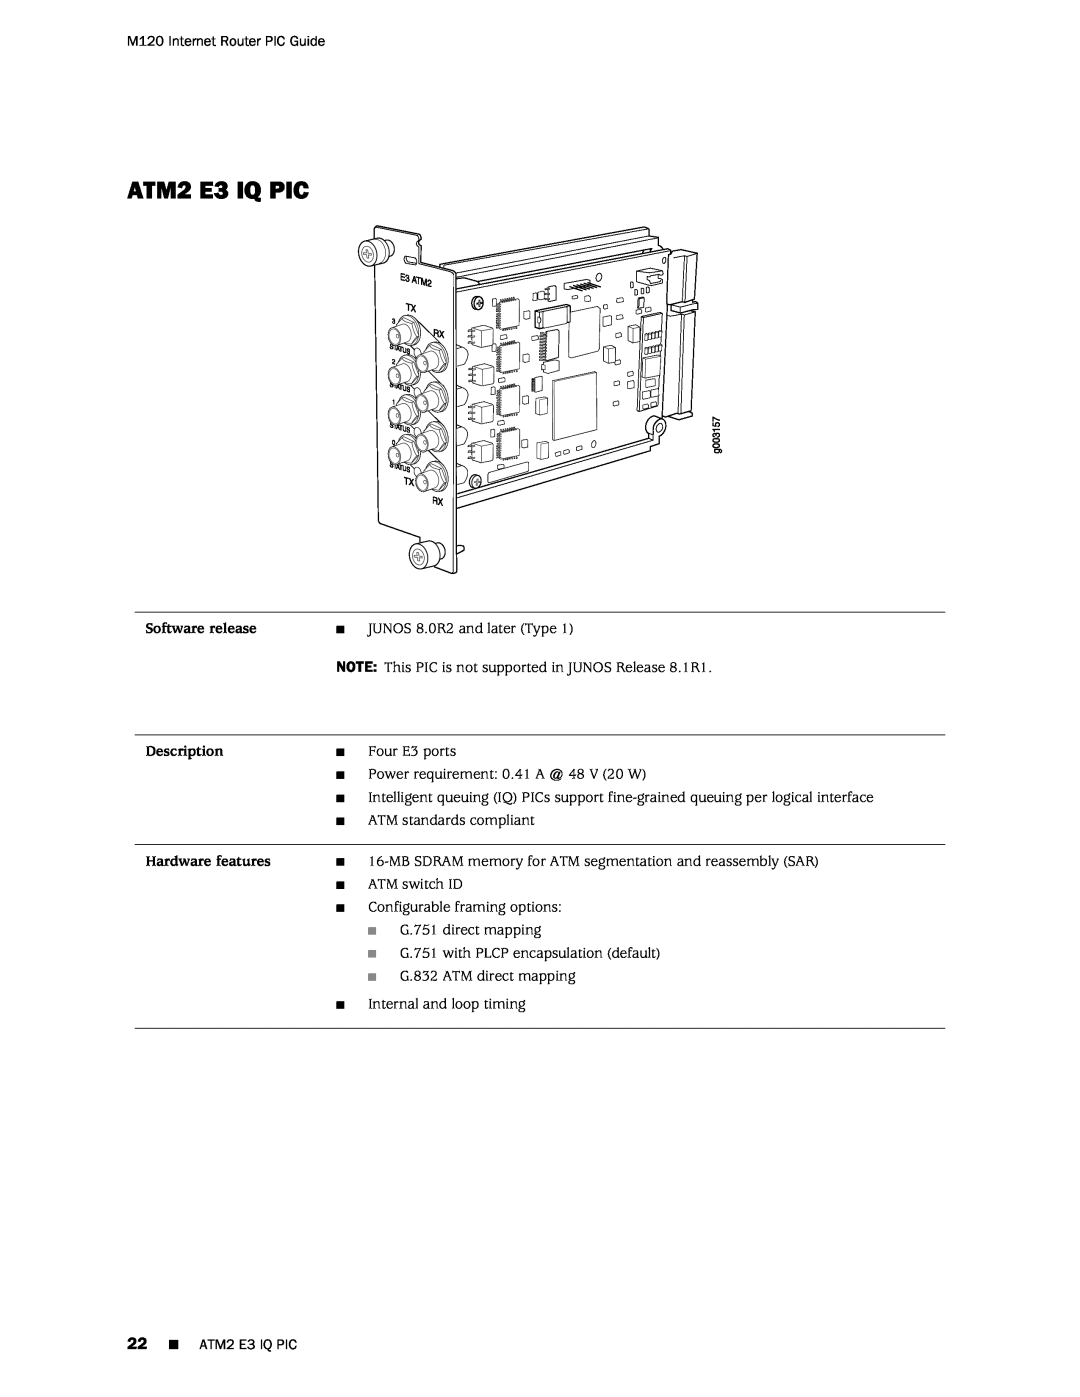 Juniper Networks M120 manual ATM2 E3 IQ PIC, Software release, Description, Hardware features 